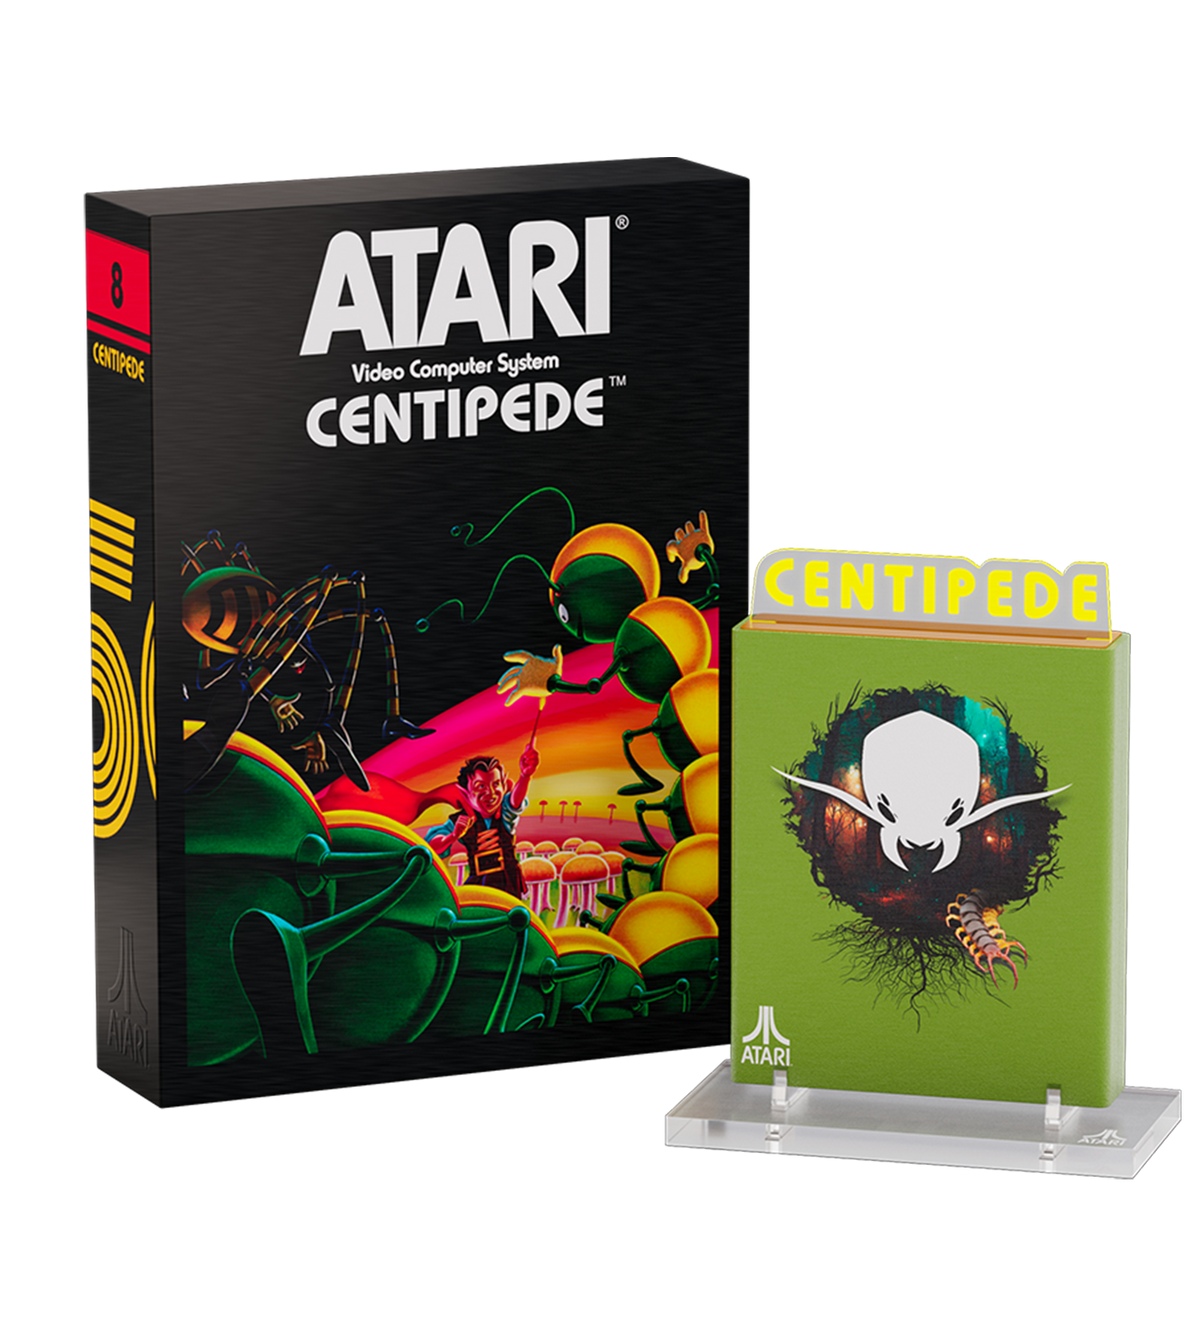 Centipede Limited Edition (Atari)